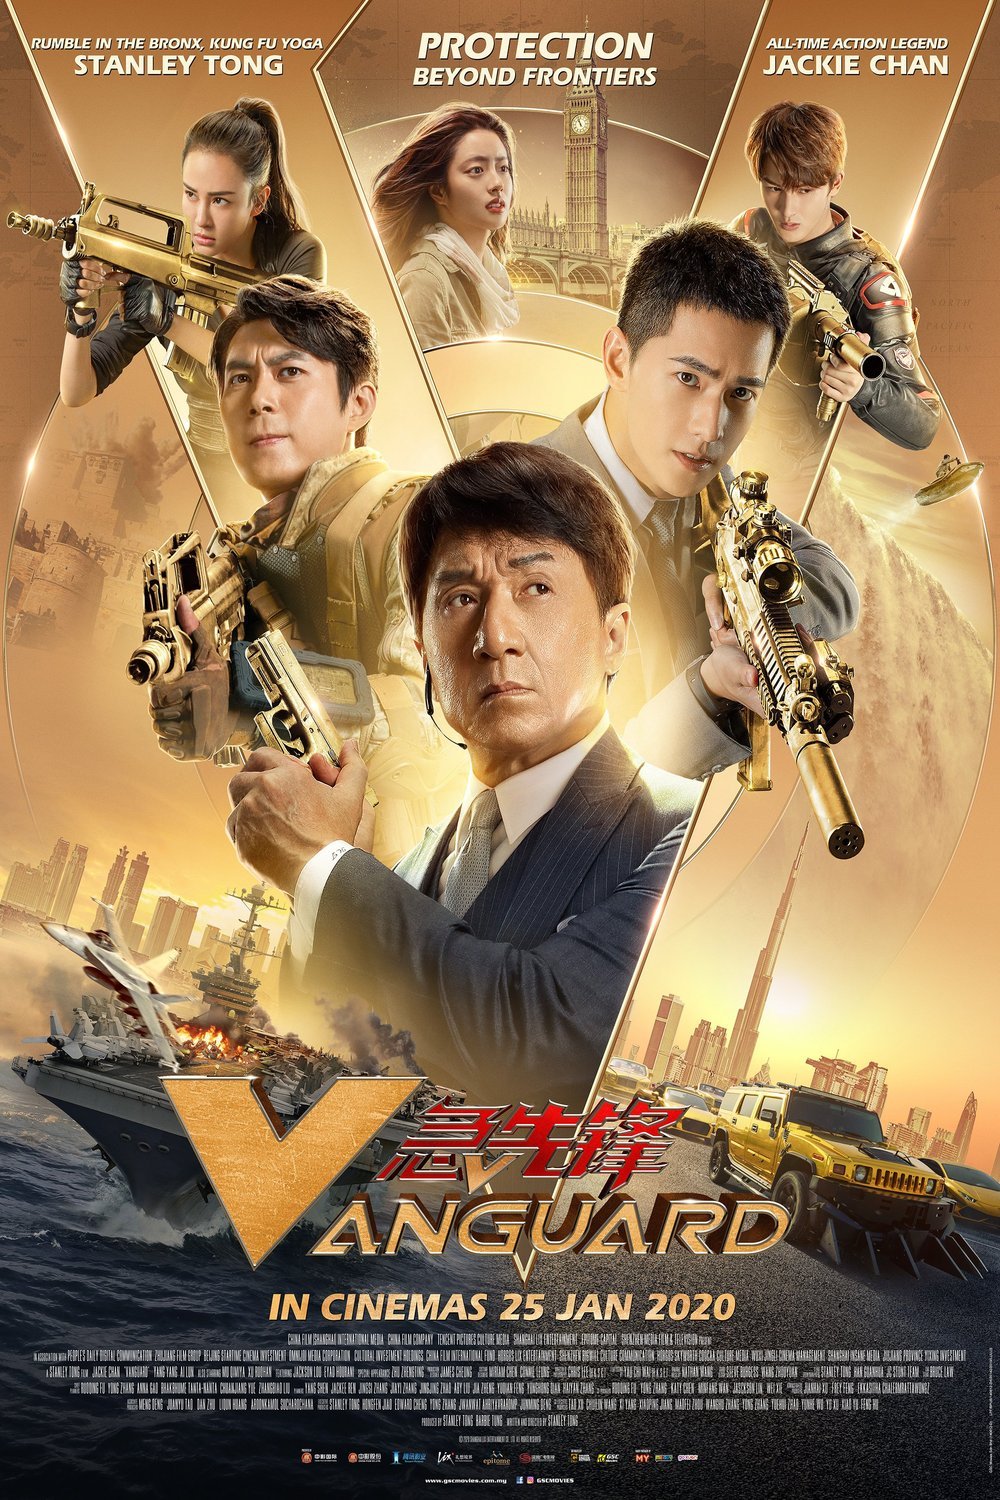 L'affiche originale du film Vanguard en mandarin